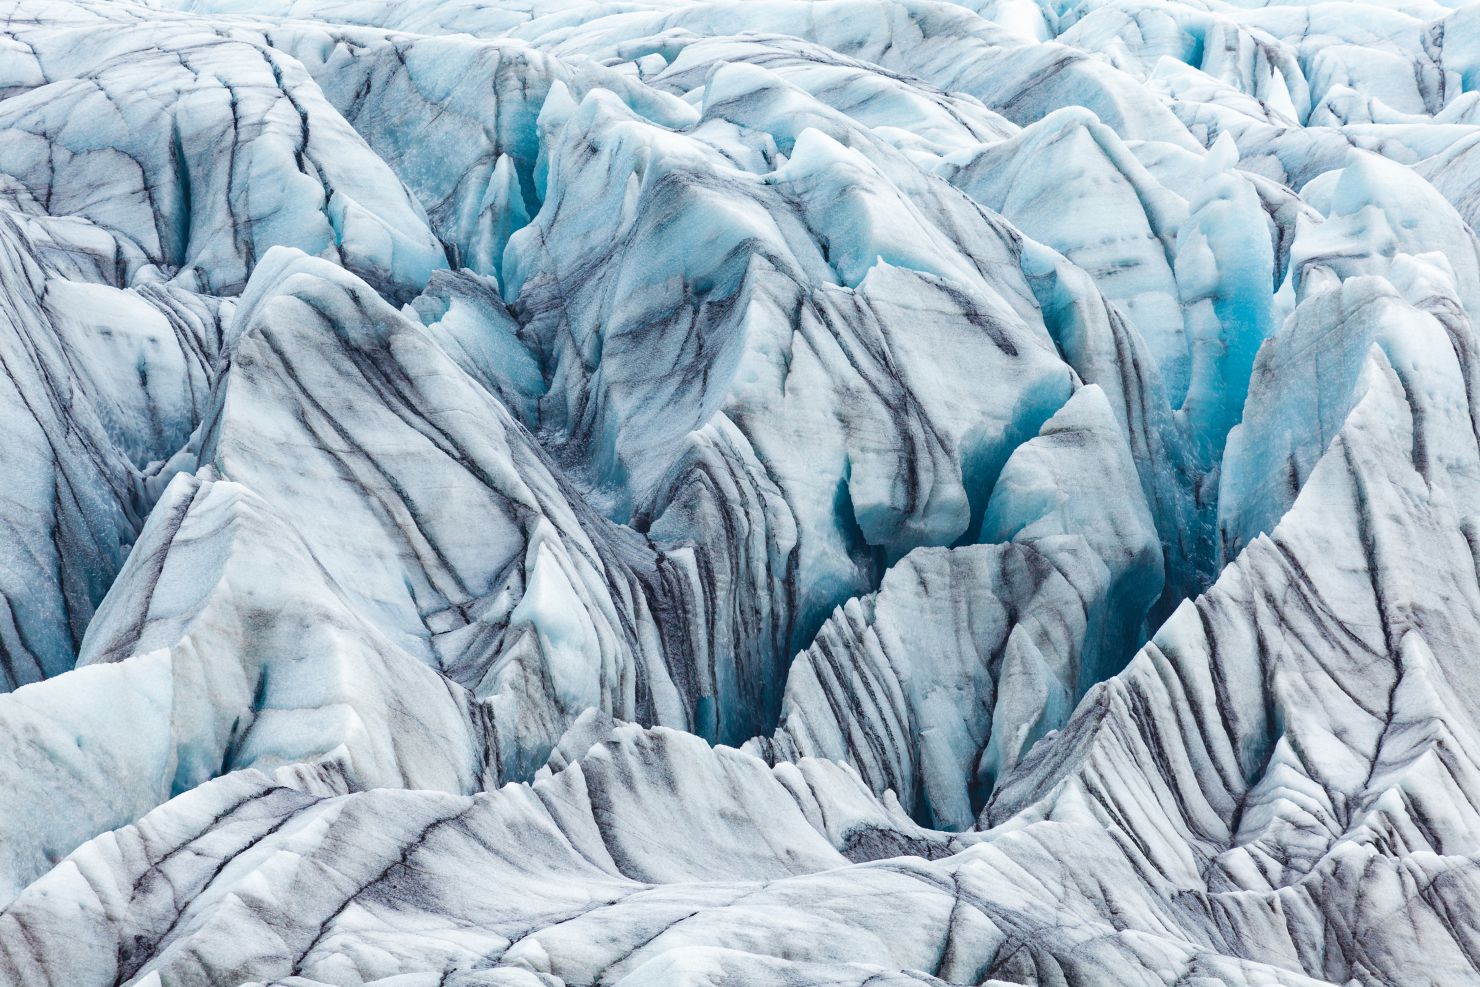 Detail of glacier